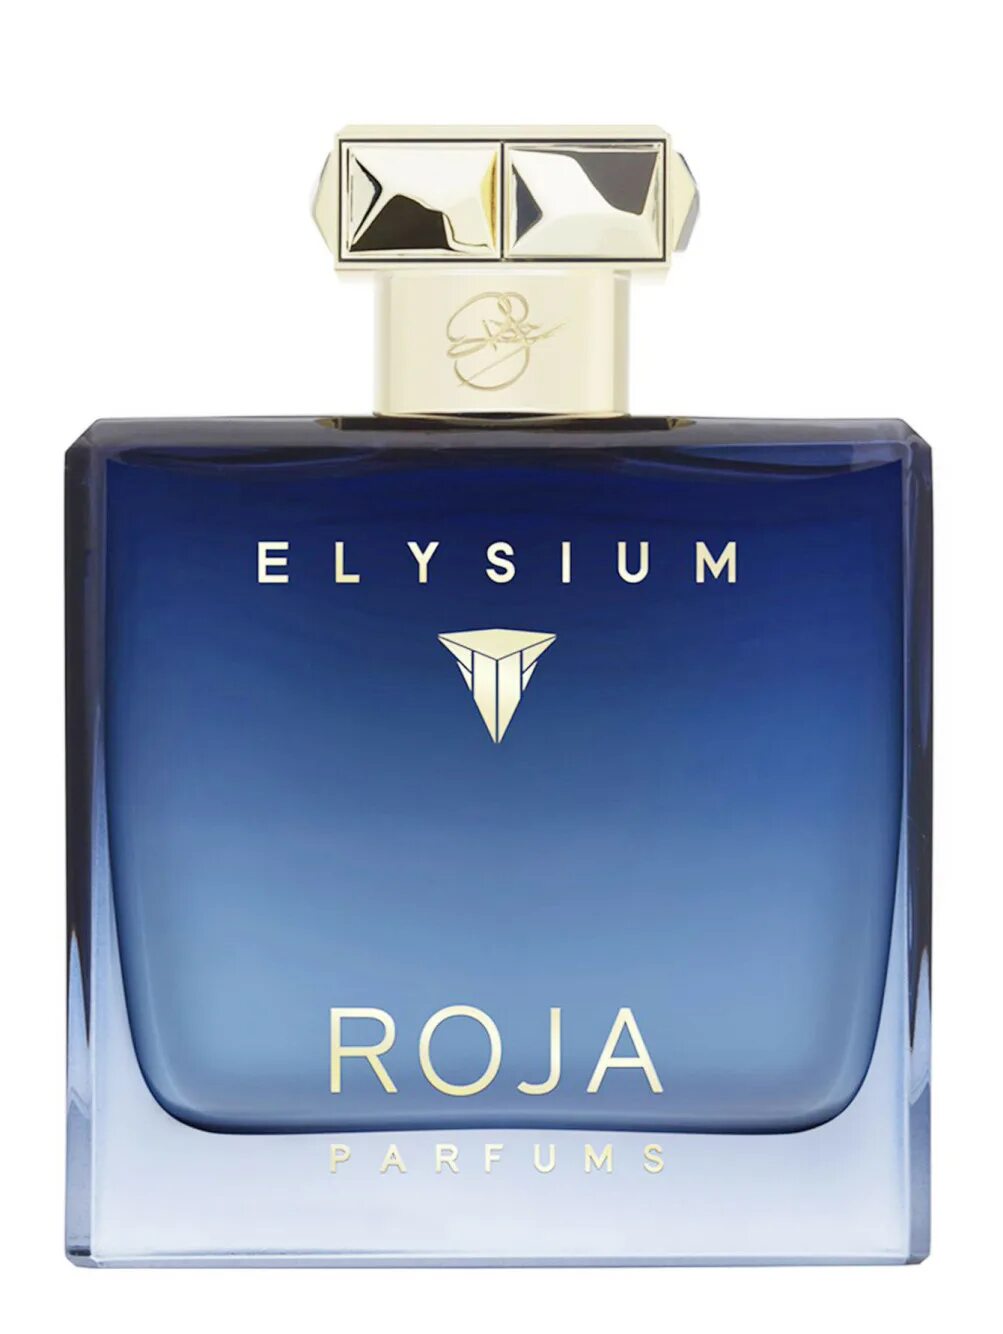 Roja dove Elysium. Roja dove Elysium pour homme. Roja Elysium Parfum 100 ml. Roja dove Elysium 100 ml.